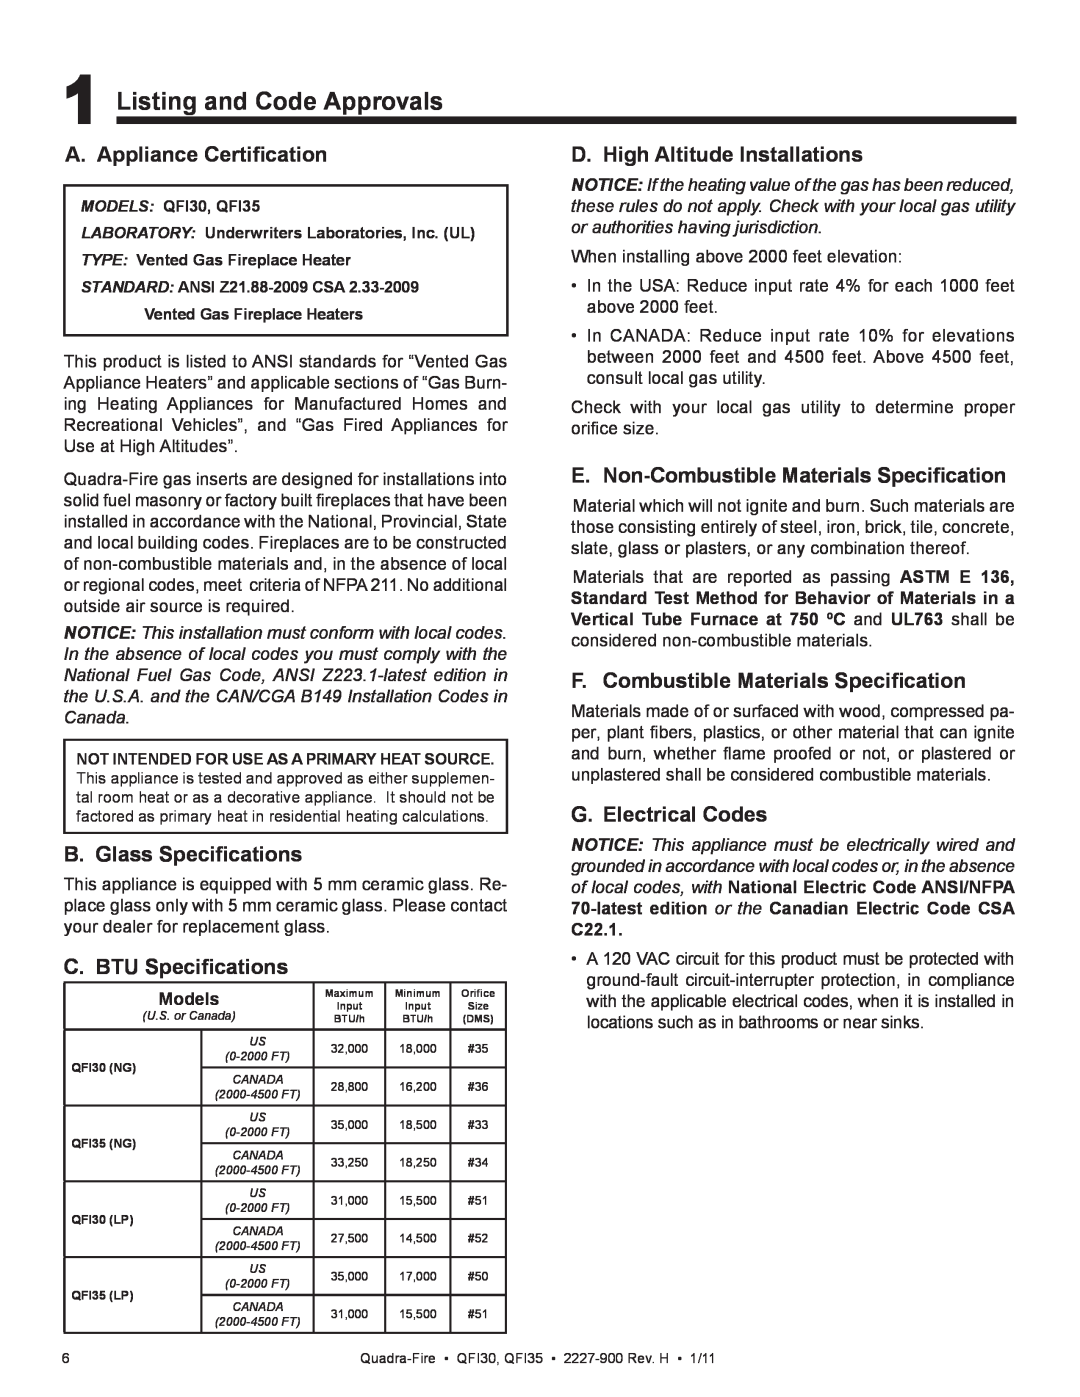 Quadra-Fire QF130 Listing and Code Approvals, A. Appliance Certiﬁcation, B. Glass Speciﬁcations, C. BTU Speciﬁcations 